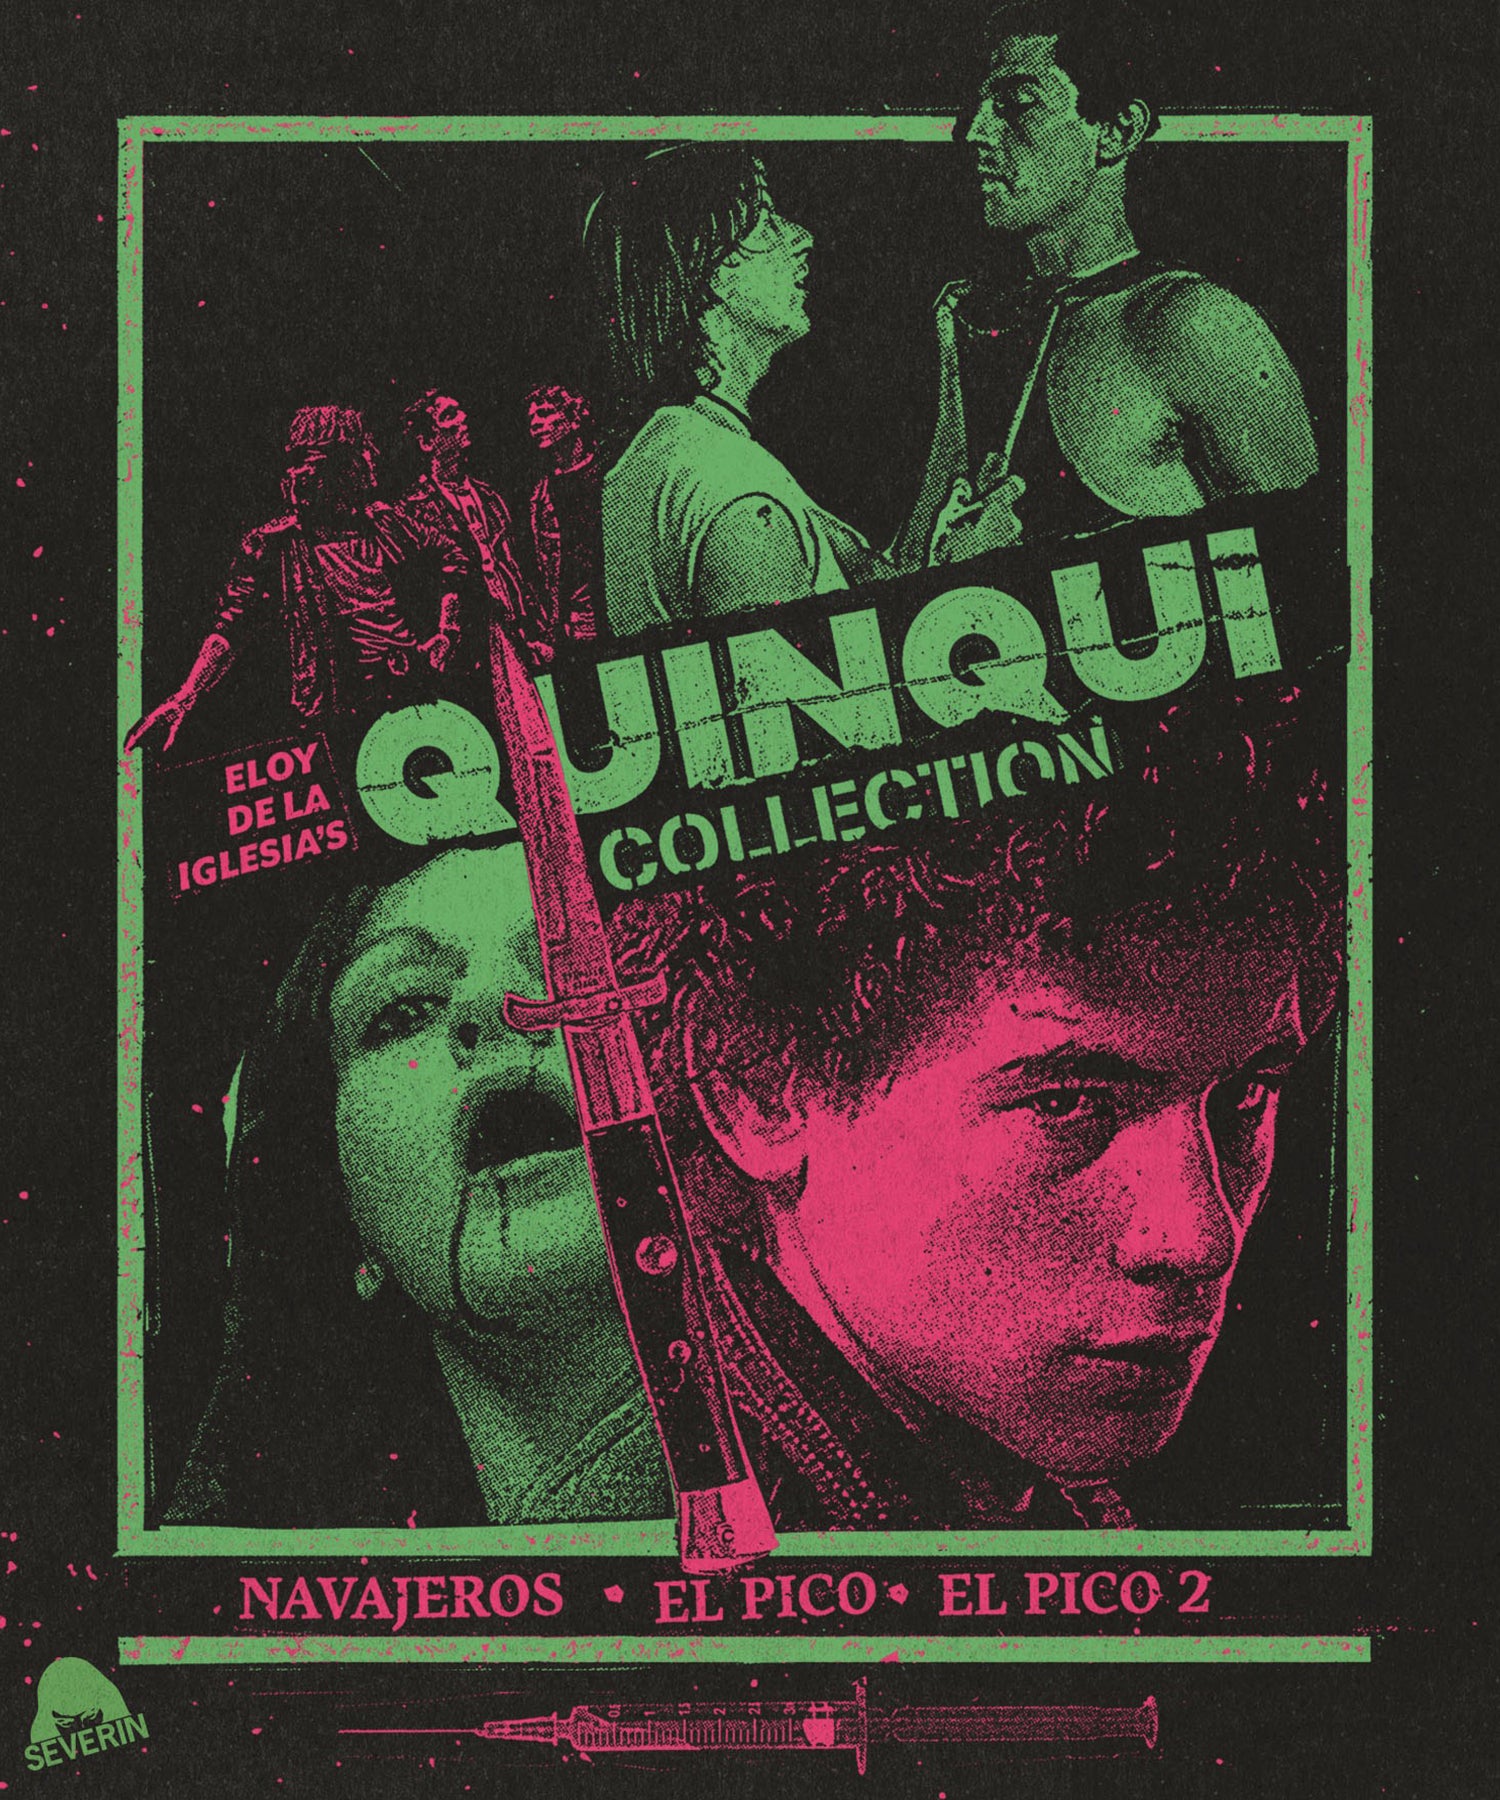 Eloy de la Iglesia's Quinqui Collection – Severin Films